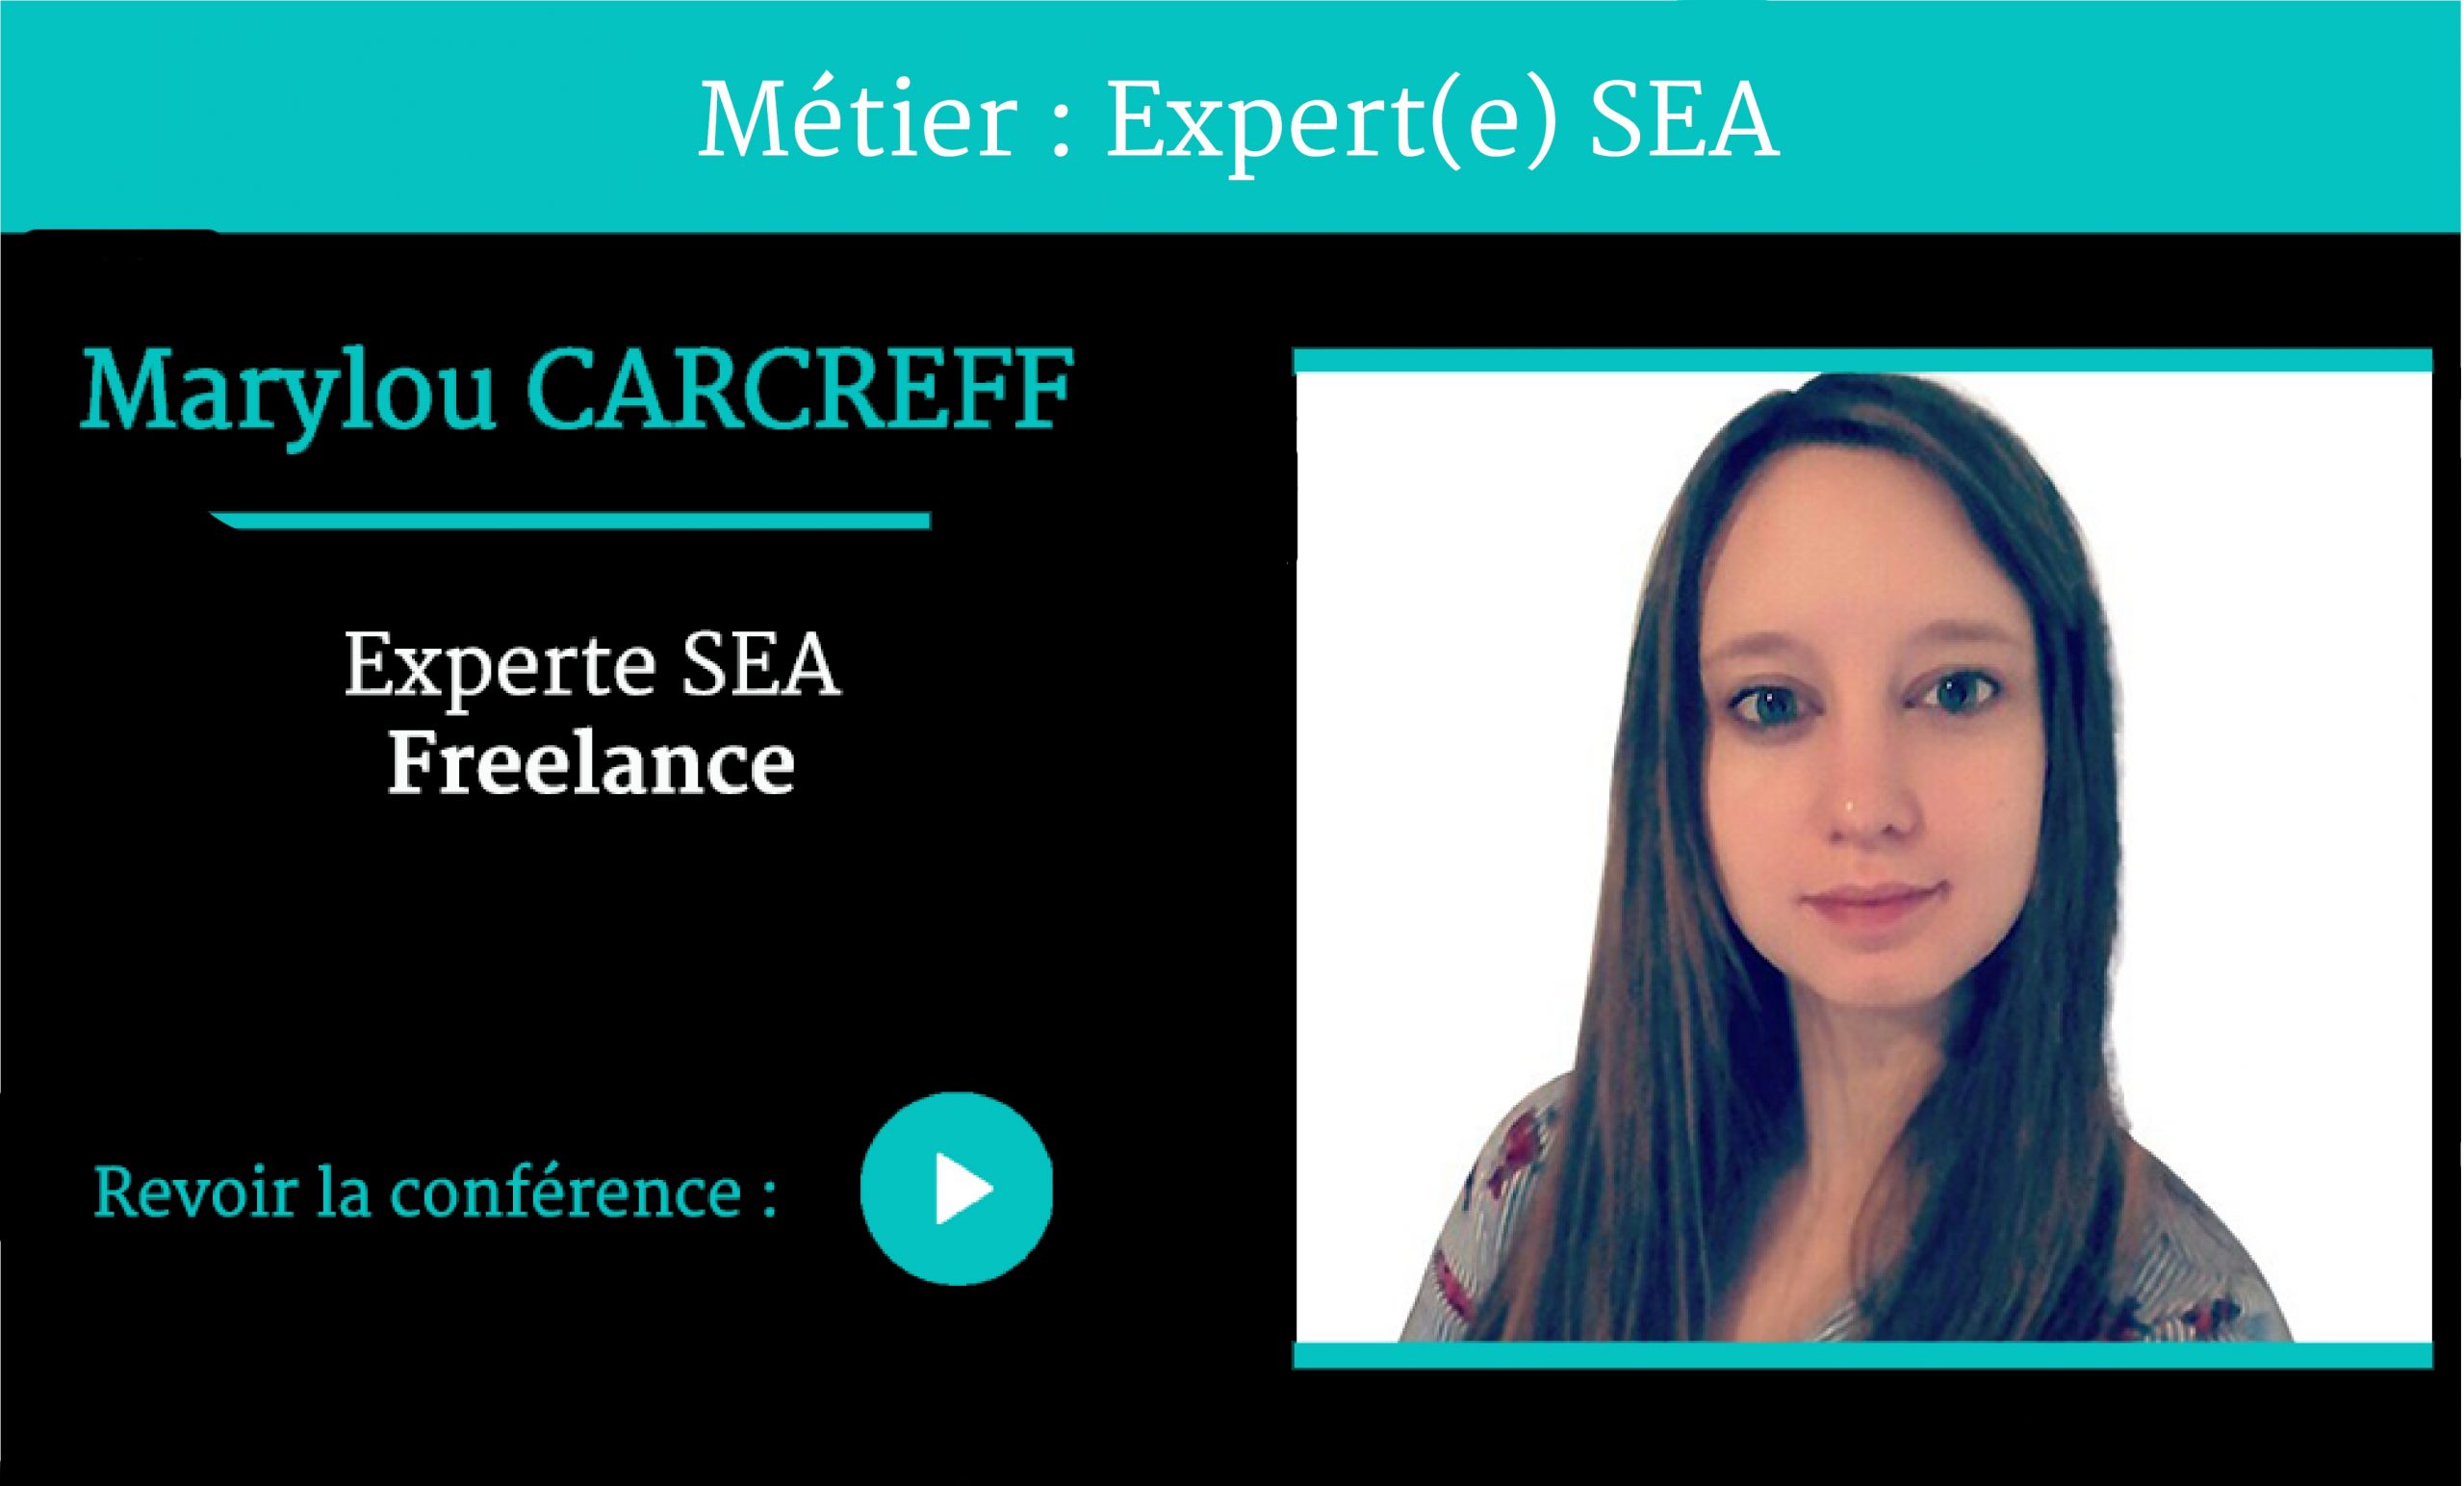 Métier Expert SEA conférence par Marylou CARCREFF pour Naïas – National Institute of Advertising Strategy